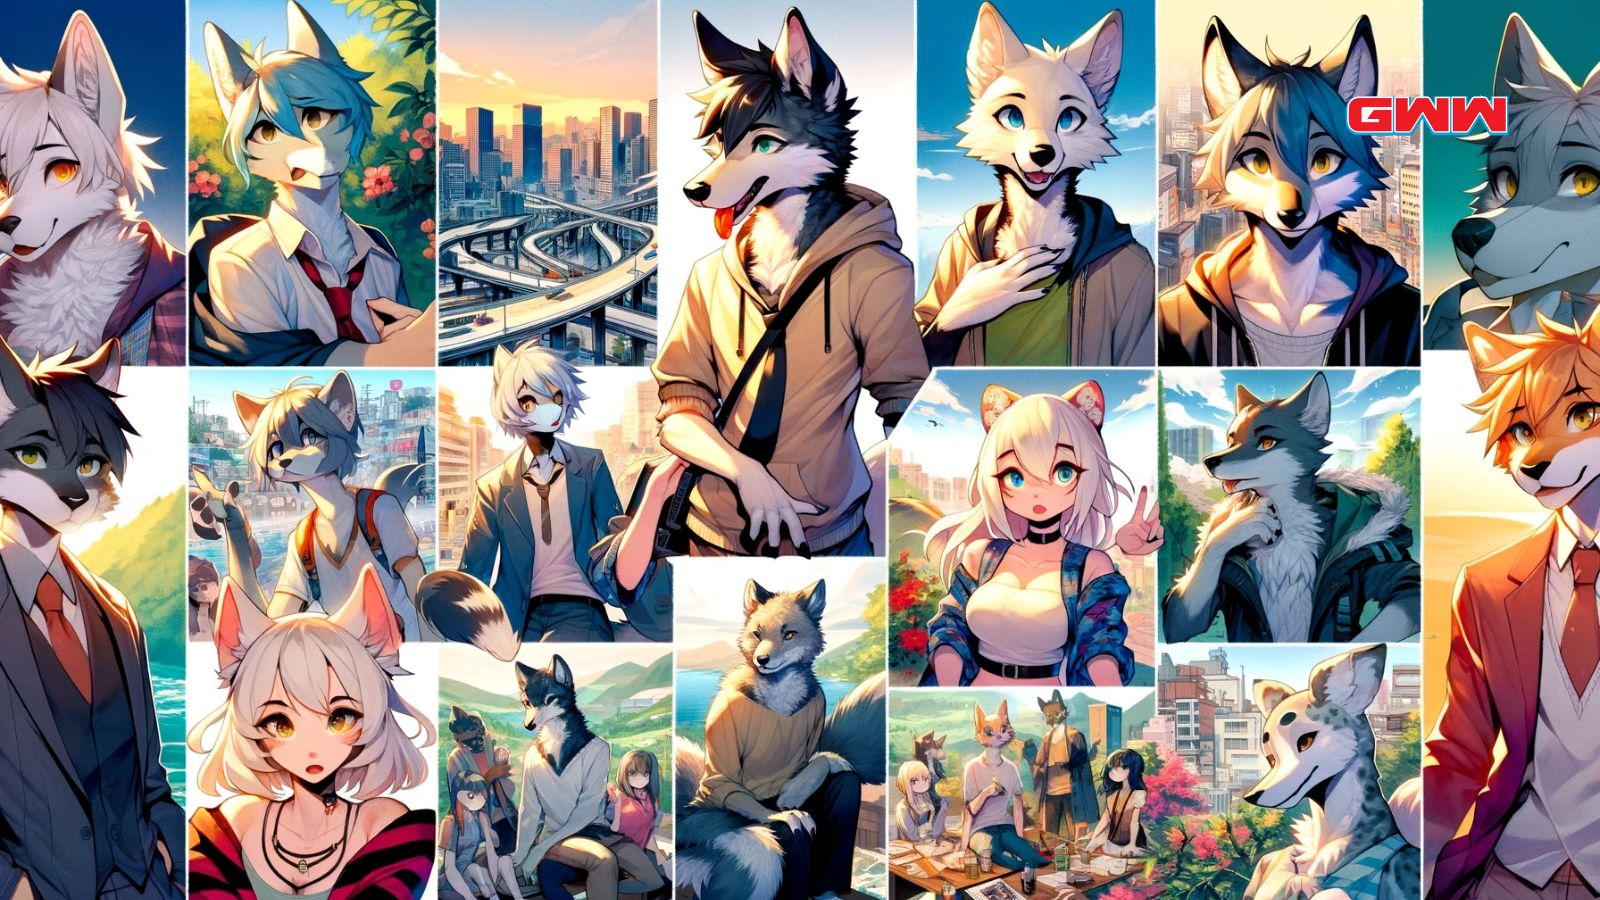 Furry anime collage with Legoshi, Michiru, and Hana in diverse settings